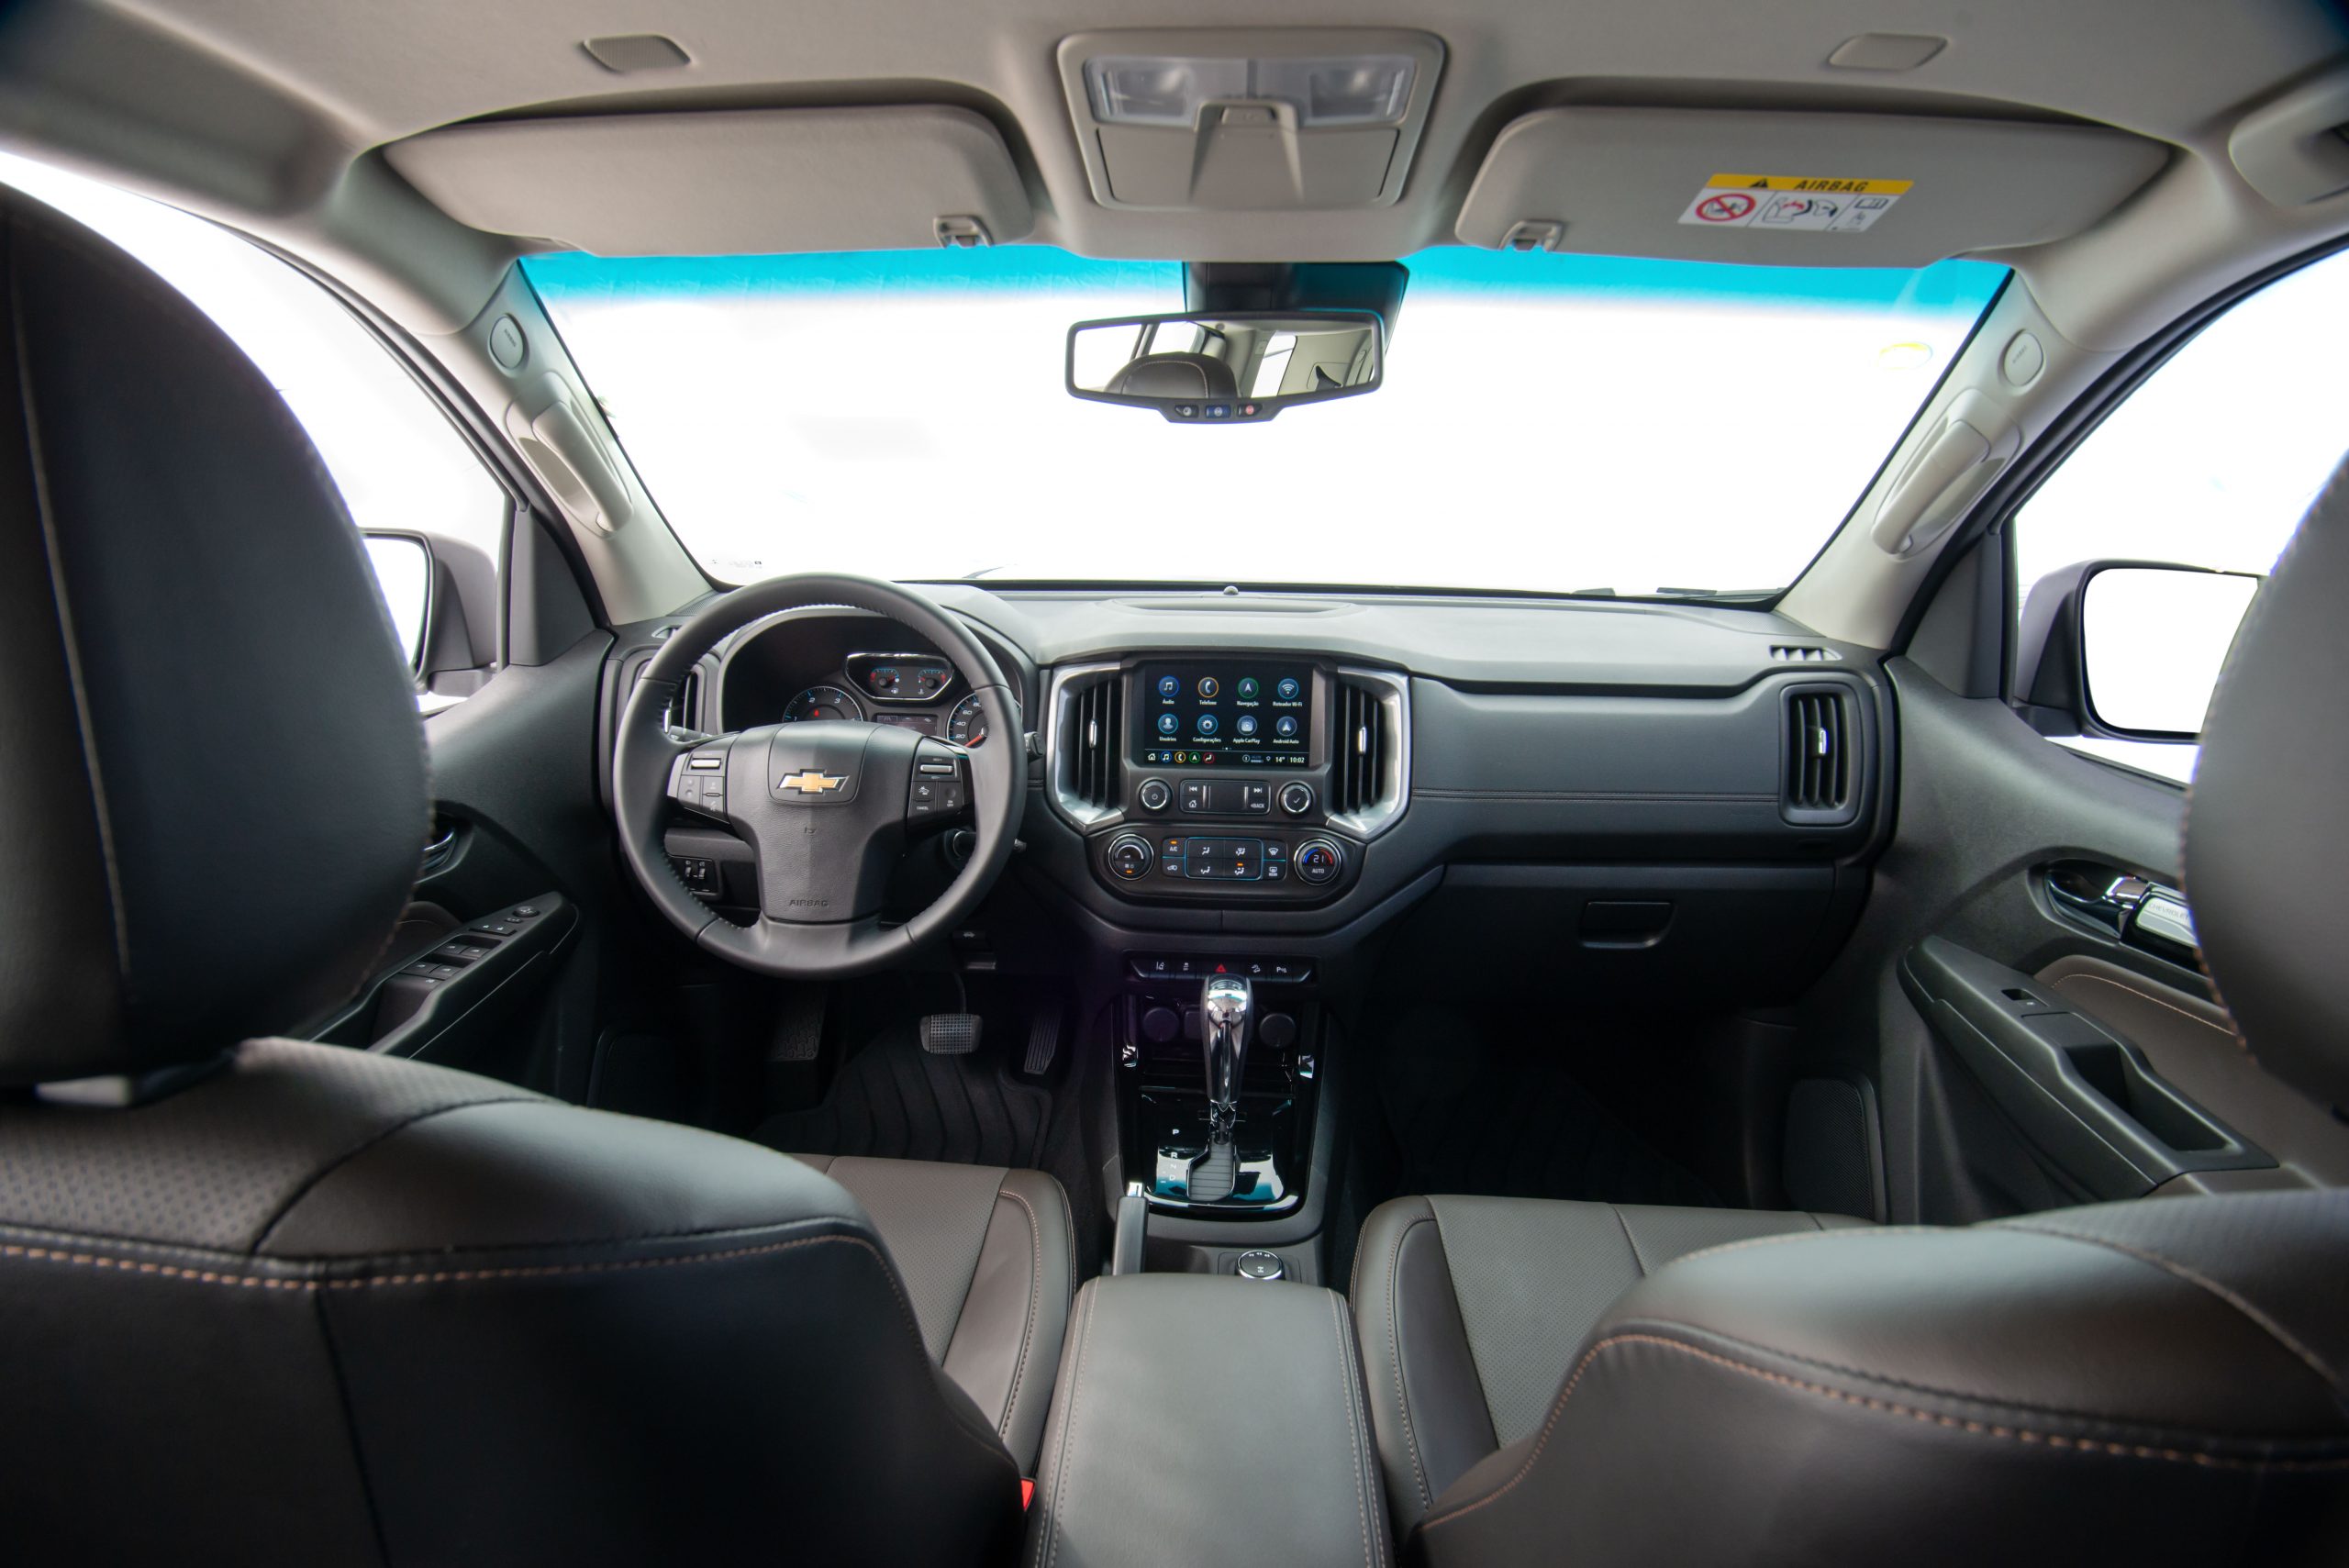 Chevrolet Trailblazer 2022: quanto custa o SUV da S10?